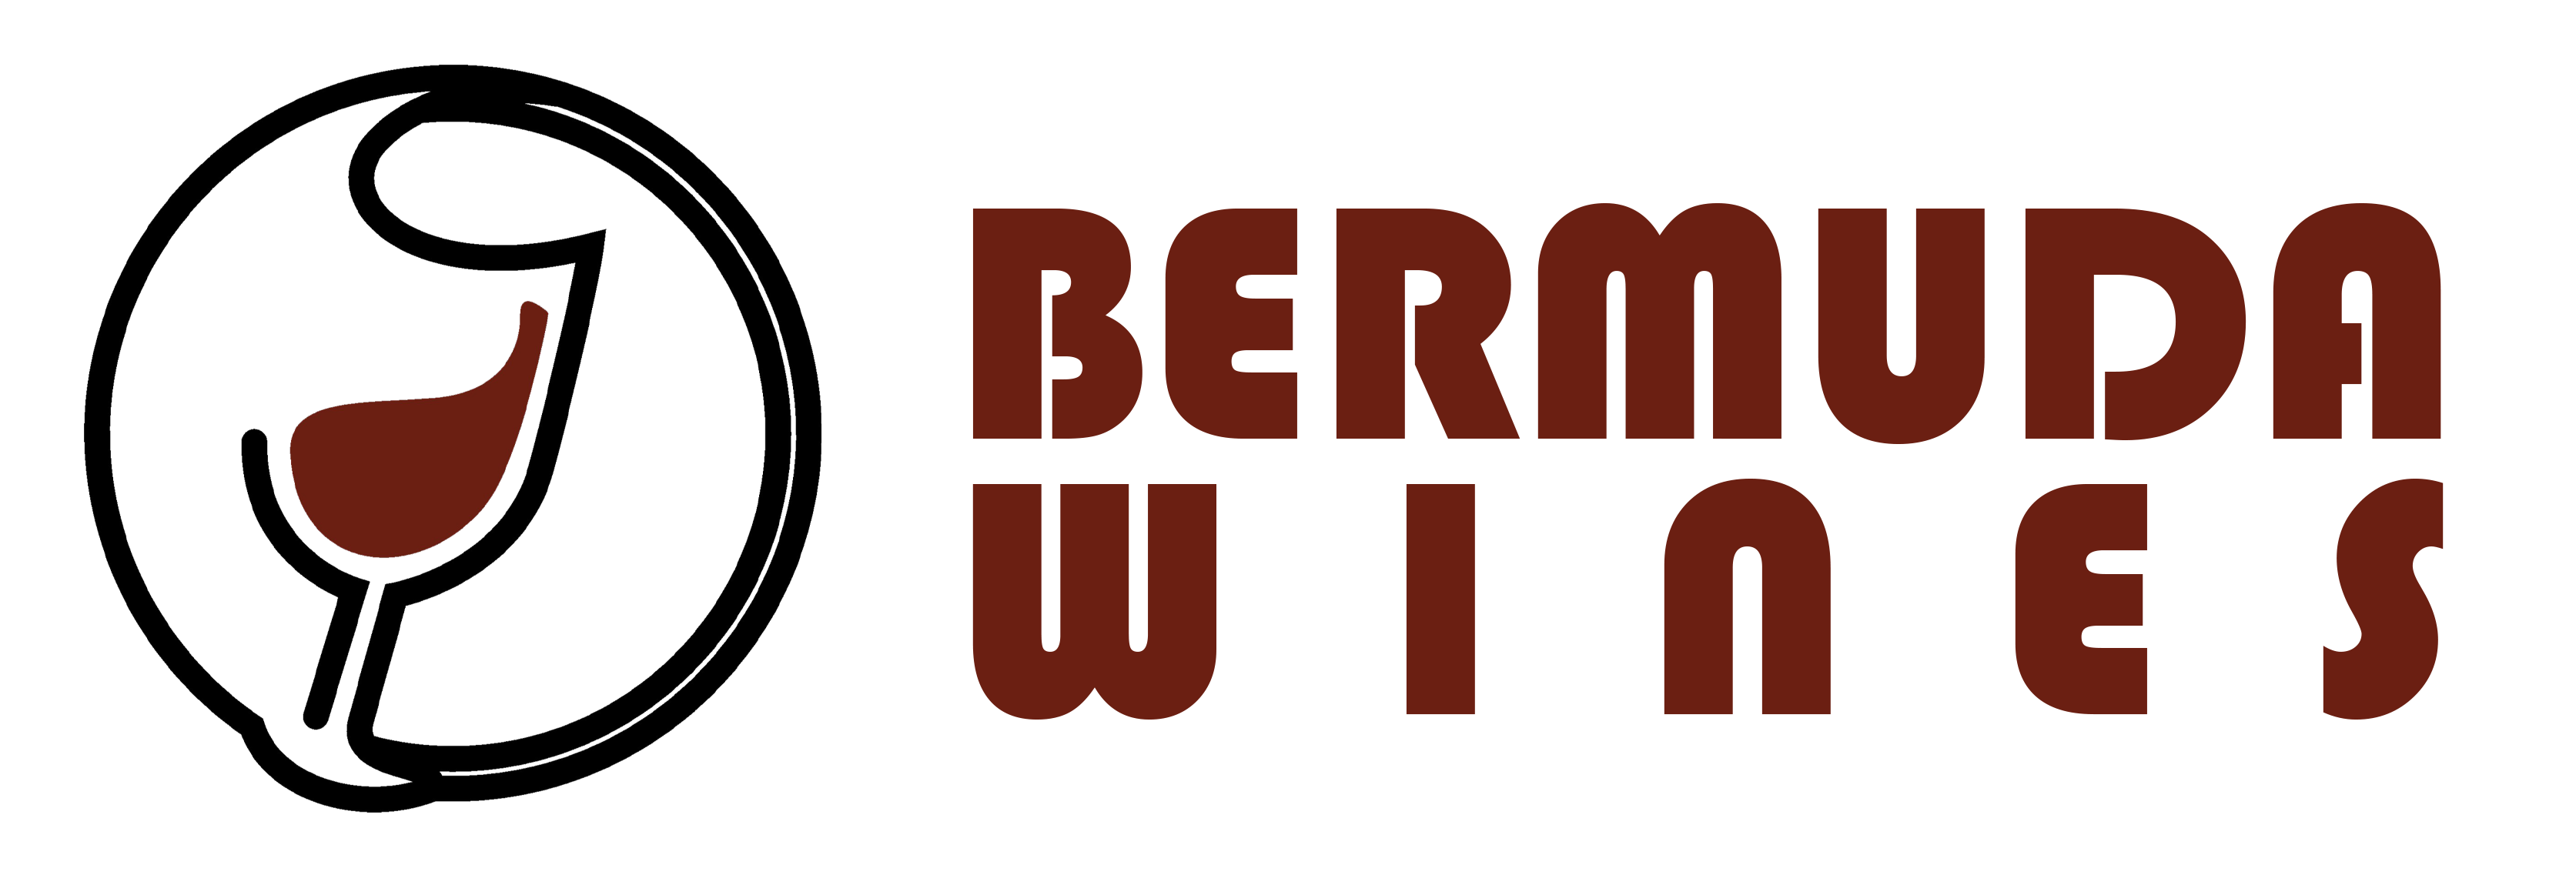 Bermuda Wine